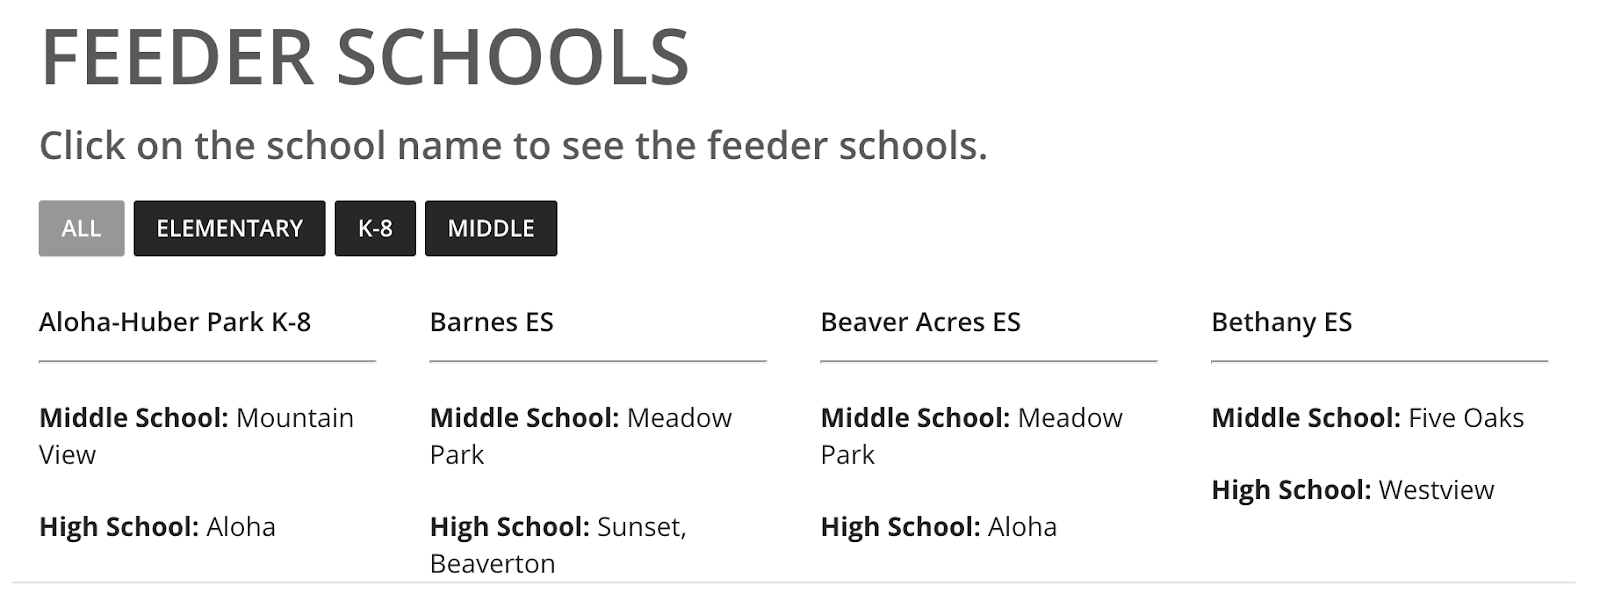 feeder schools page on the website of beaverton school district